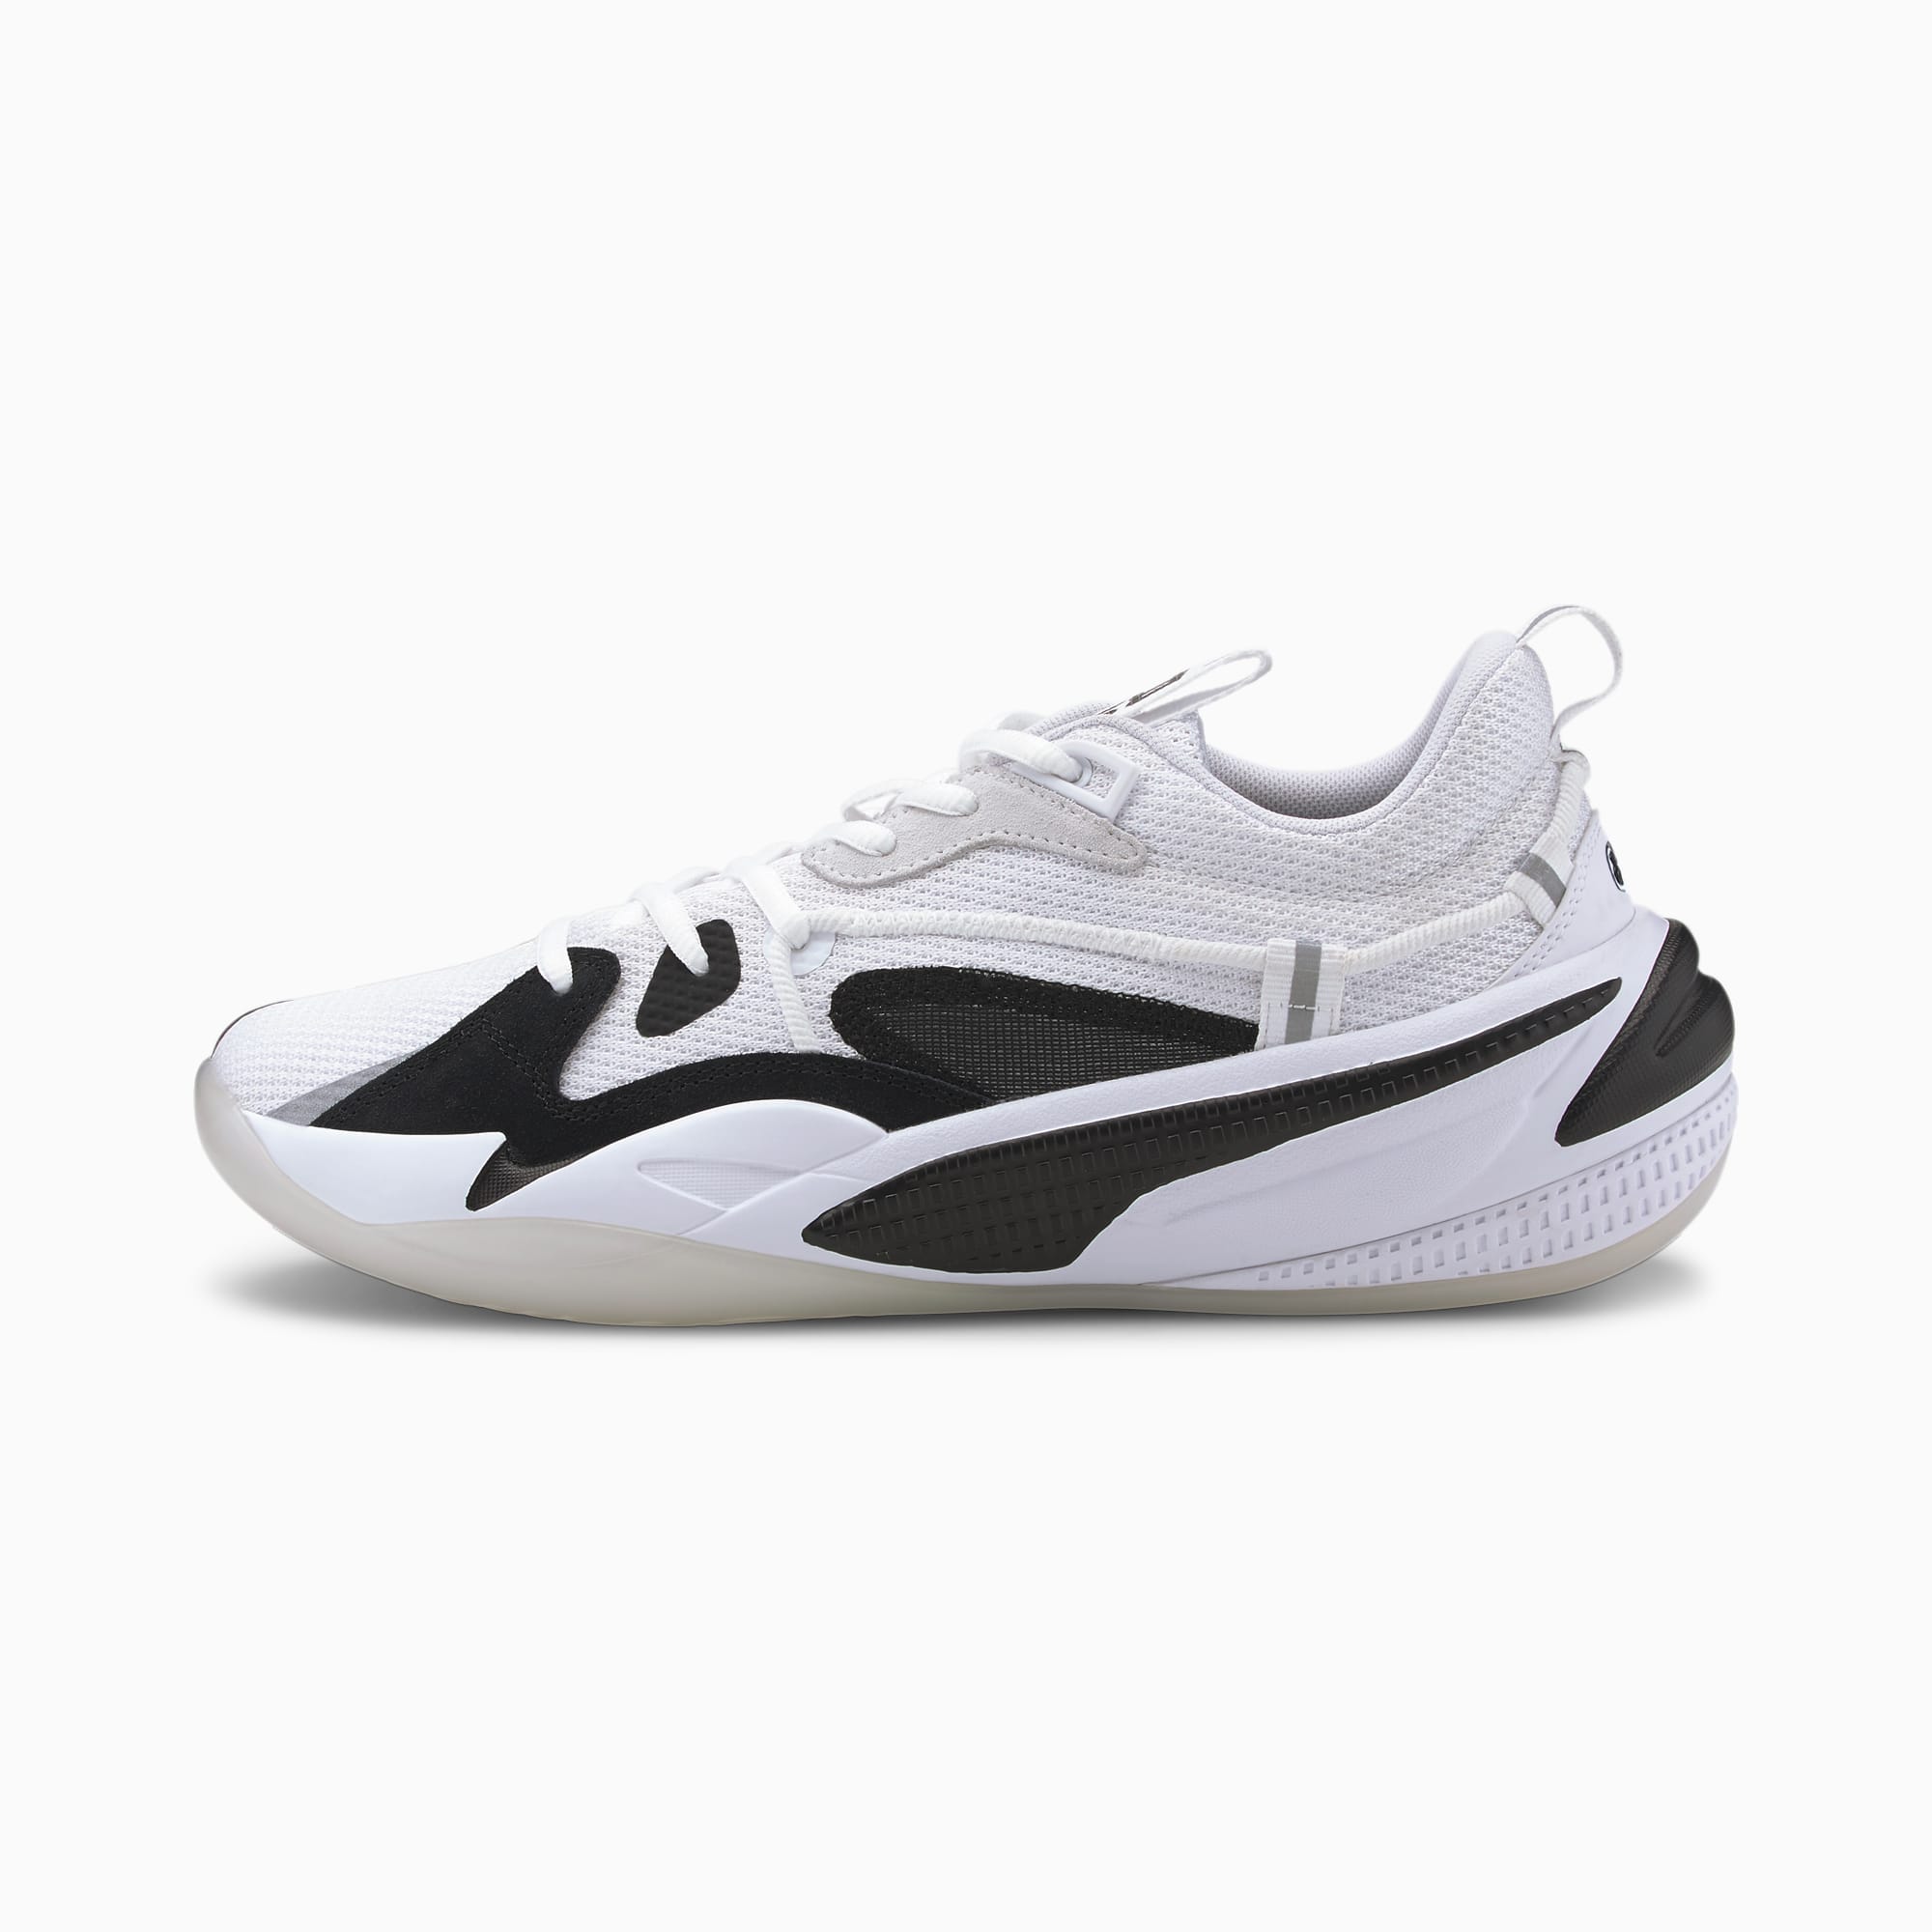 all white puma sneakers